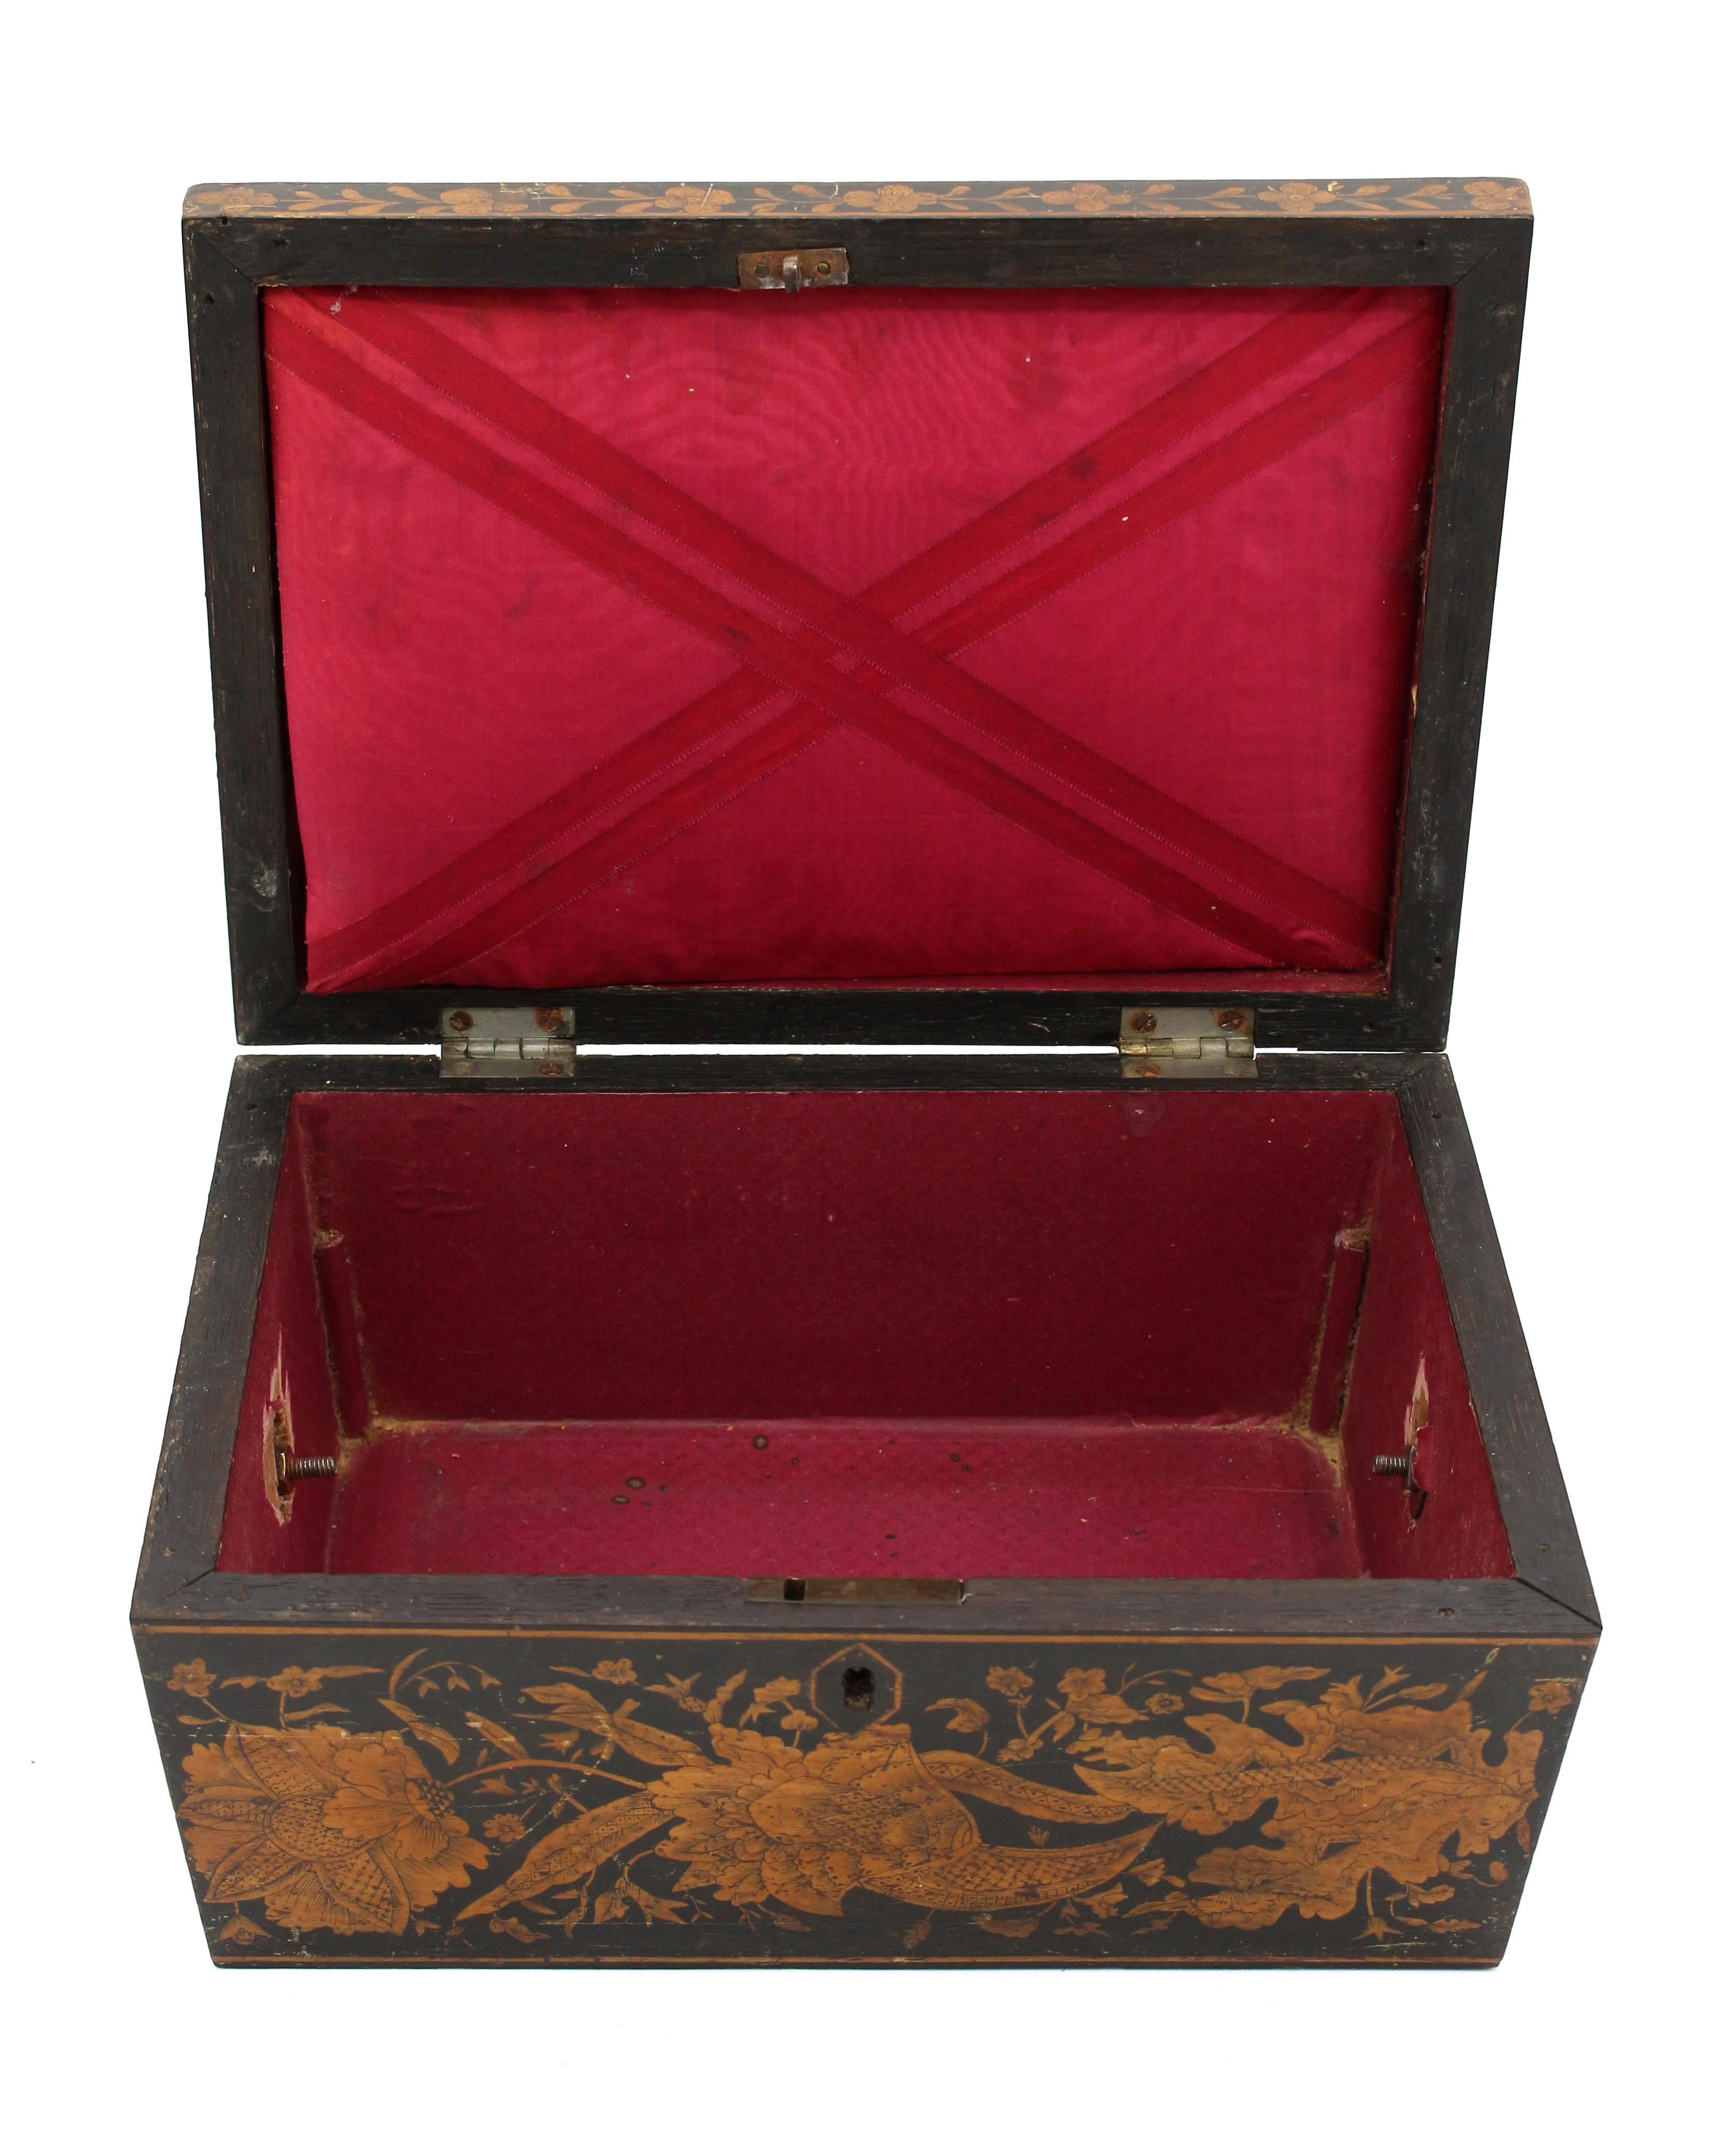 Circa 1830s English Regency to George IV Penwork Box For Sale 3